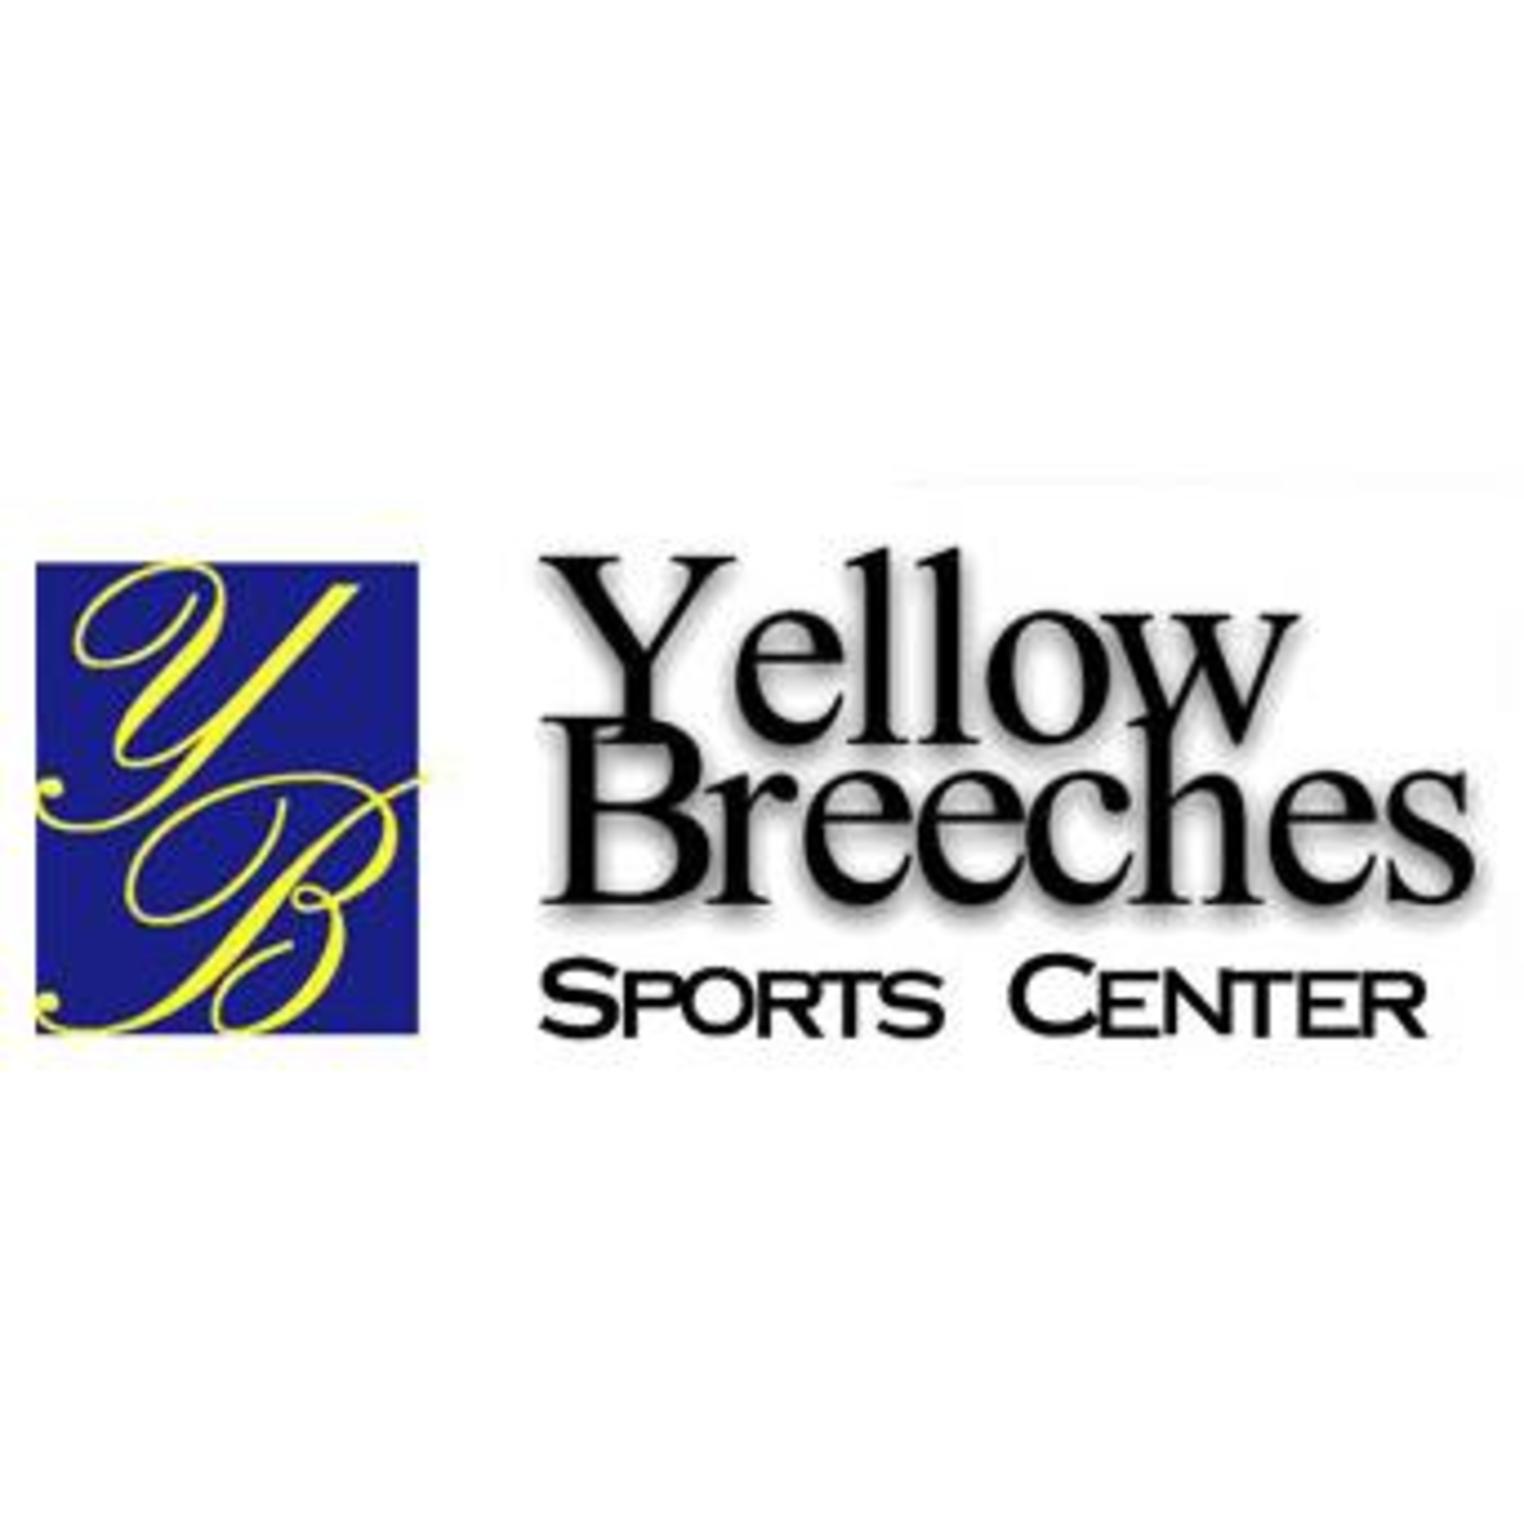 Yellow Breeches Sports Center